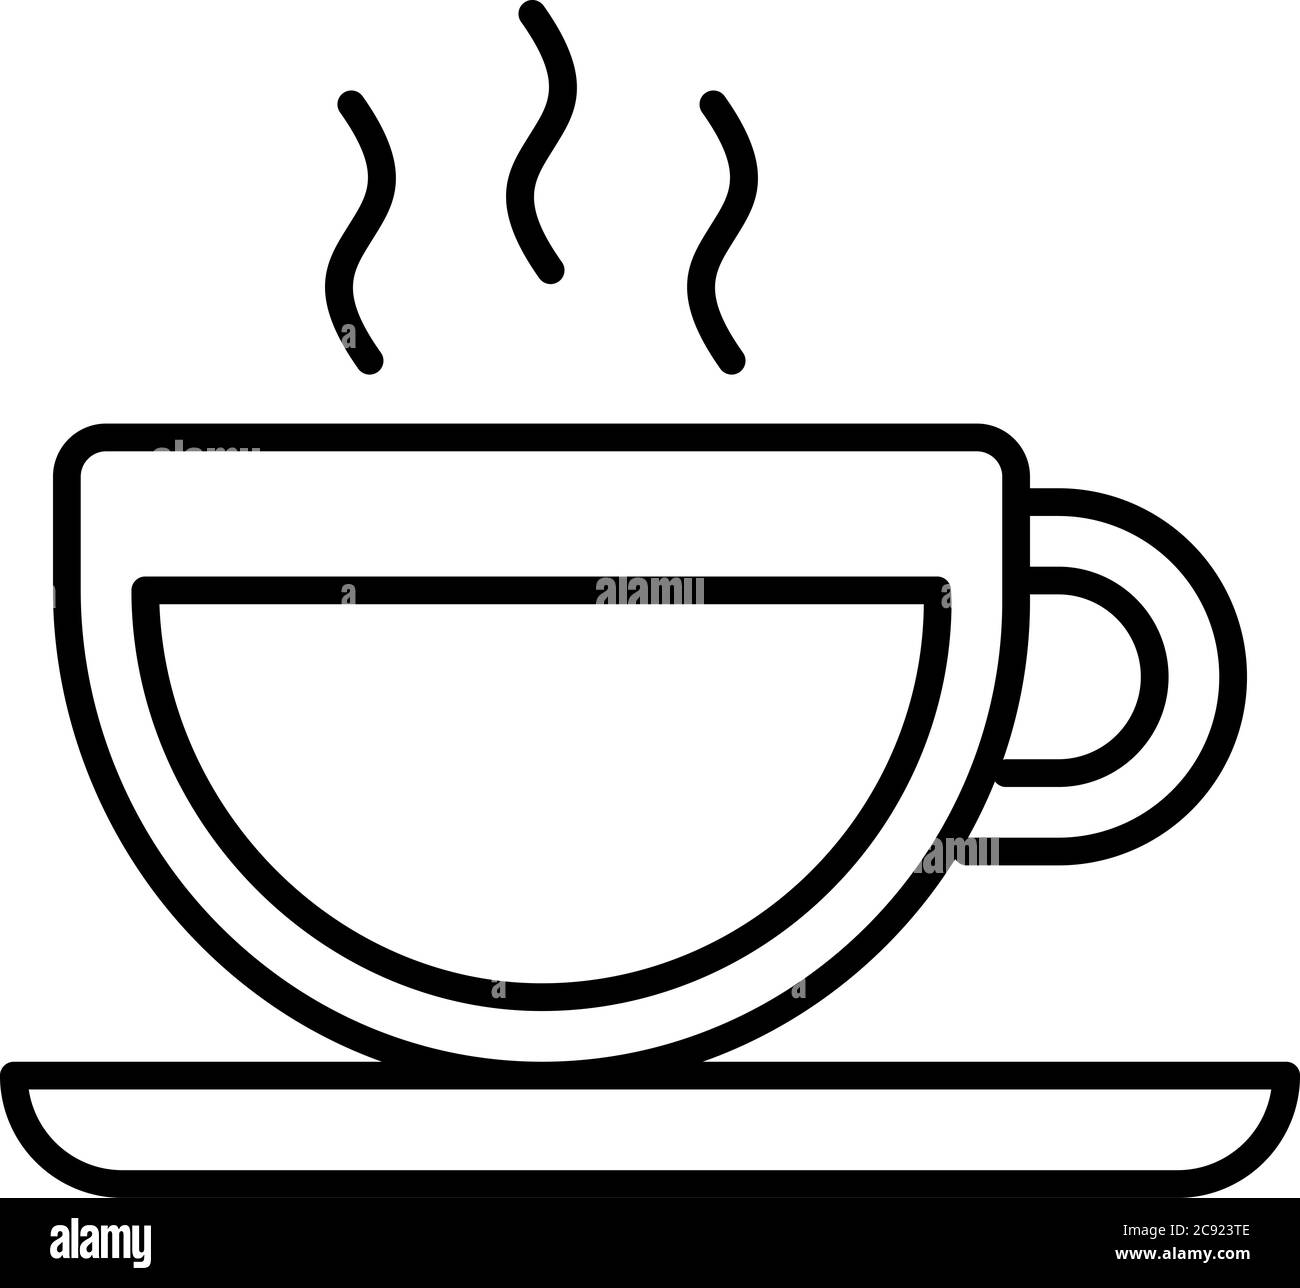 Kaffee, Café, Kaffeemaschine, Kaffeebohnen, Kaffeestube, Espresso, Espressomaschine, Barista, Kaffeebohnen, schwarzer Kaffee, Gebäck, Croissant, Tee Stockfoto